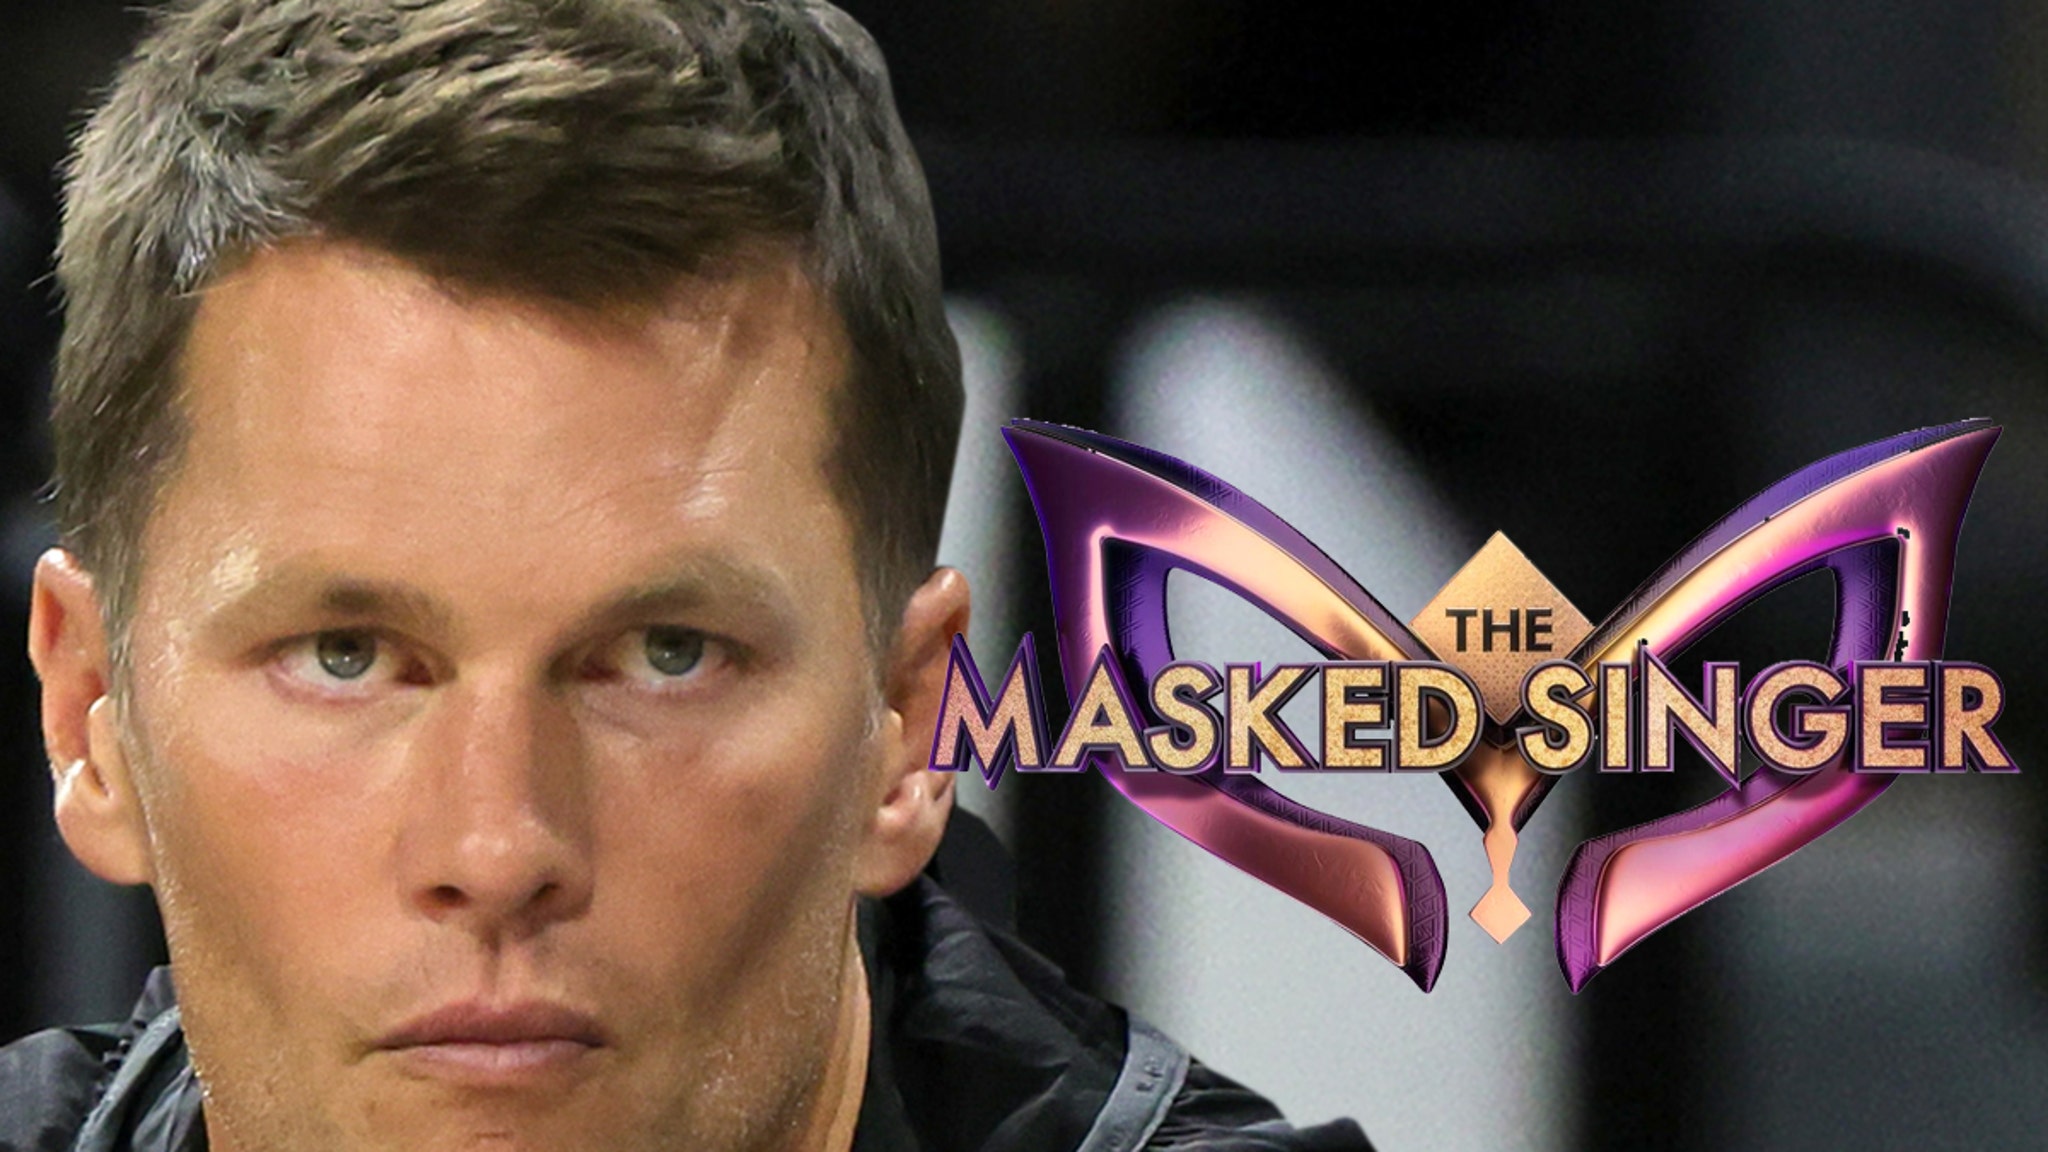 Tom Brady Denies ‘Masked Singer’ Appearance During Break From Buccaneers